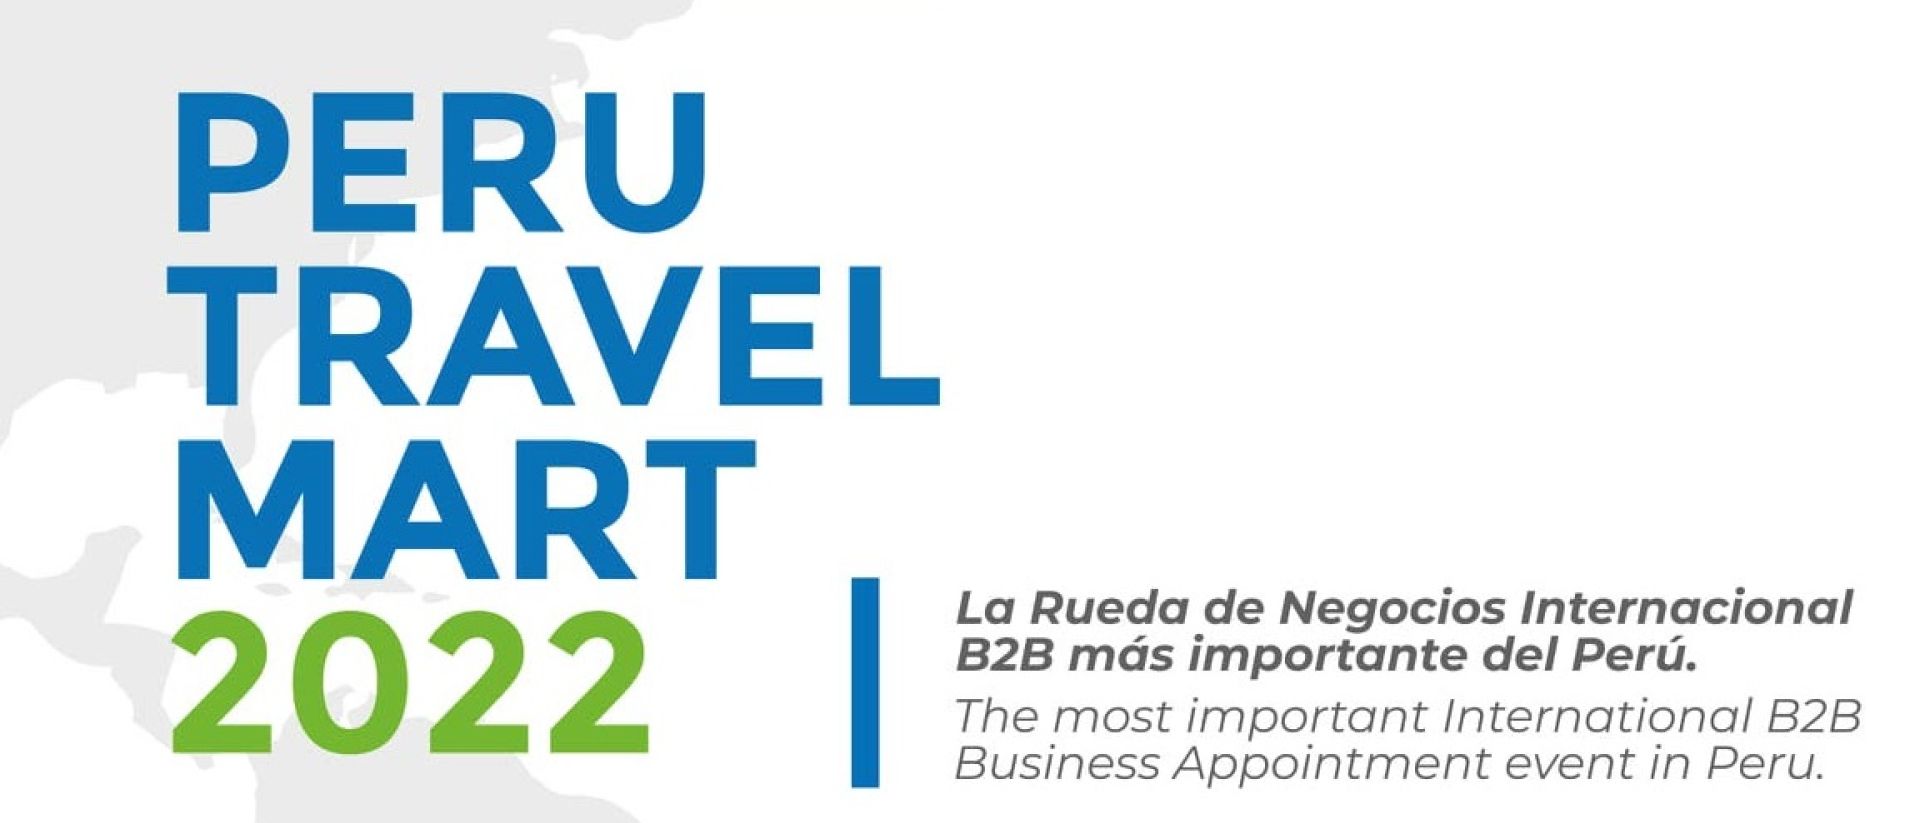 Peru Travel Mart 2022, En Lima